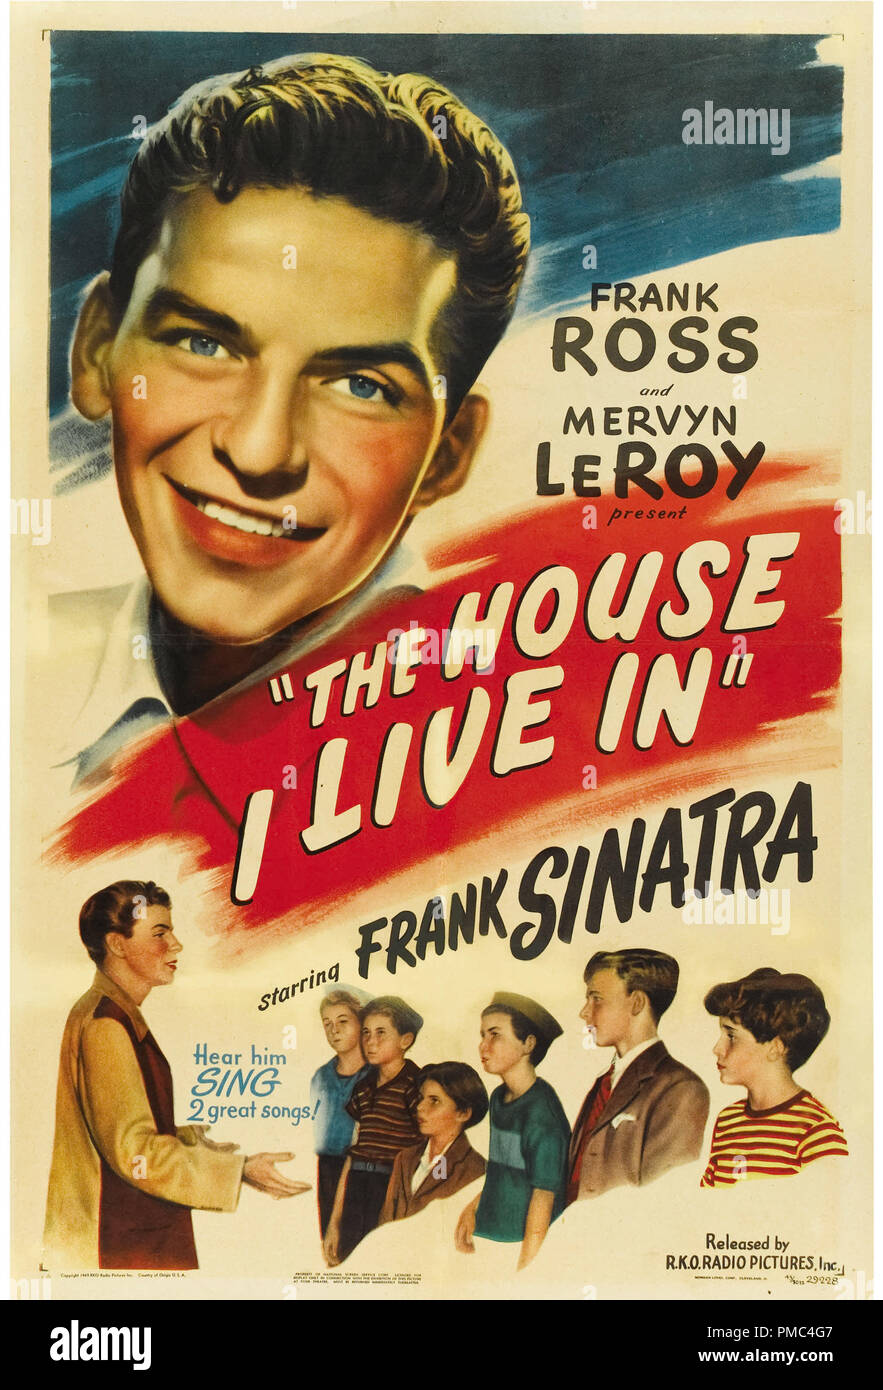 Las Vegas Nevada Frank Sinatra United States Travel Advertisement Art Poster 